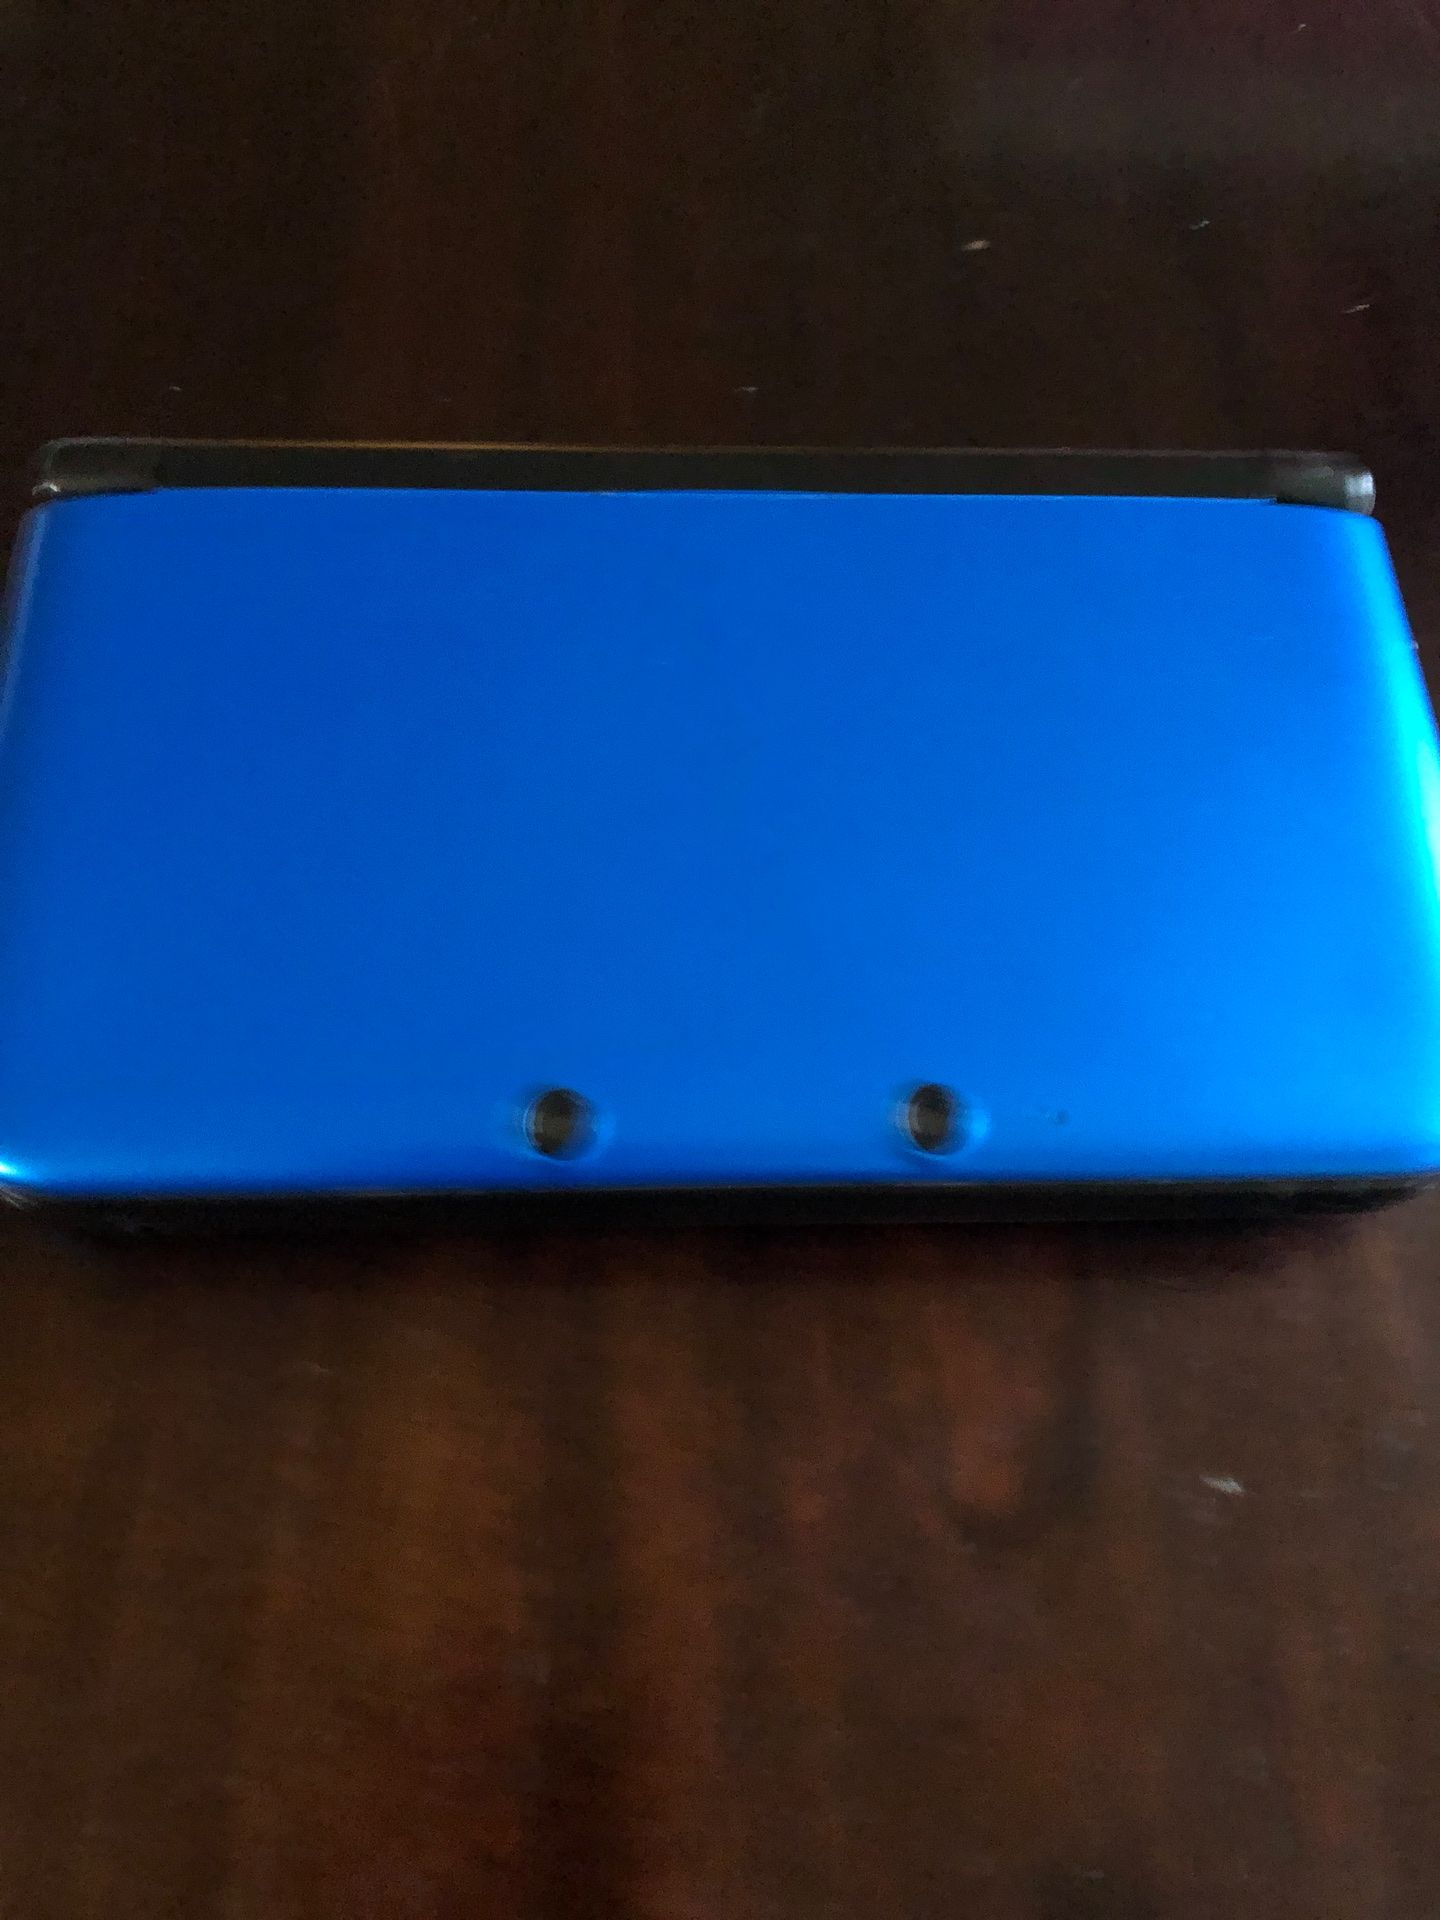 Blue Nintendo 3ds XL